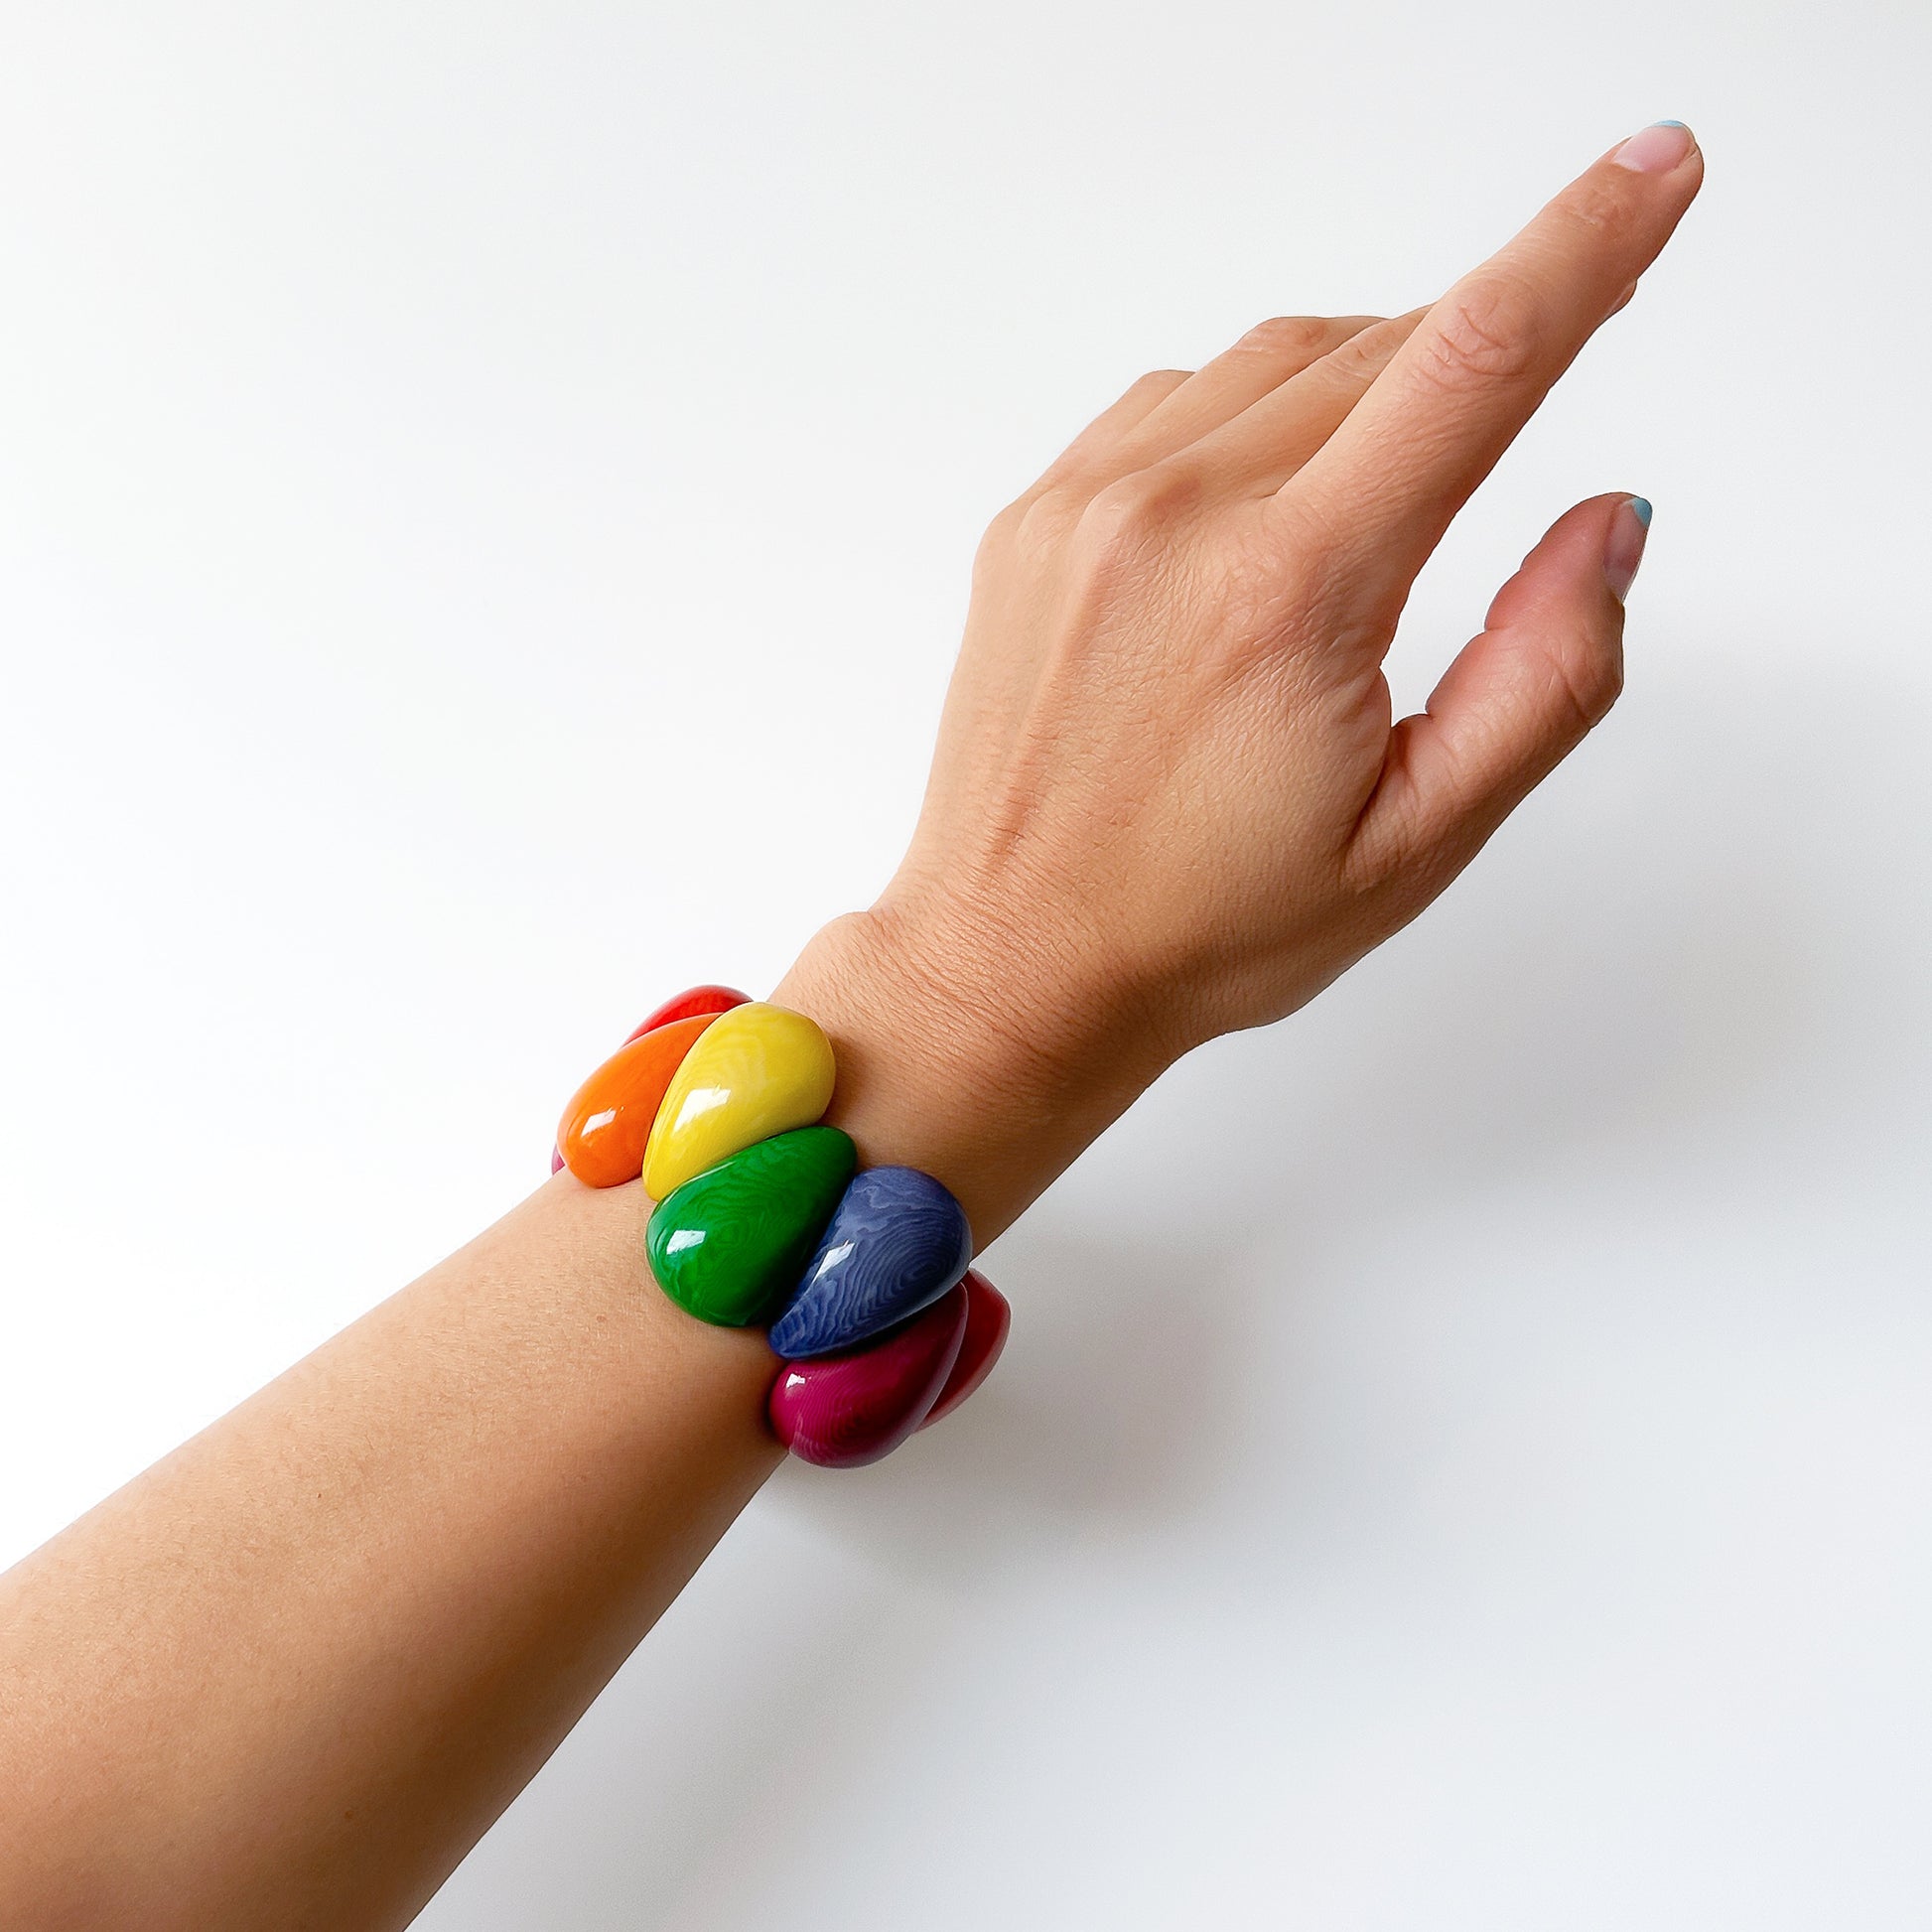 Wrist with rainbow colour bracelet hand made with tagua nut beads